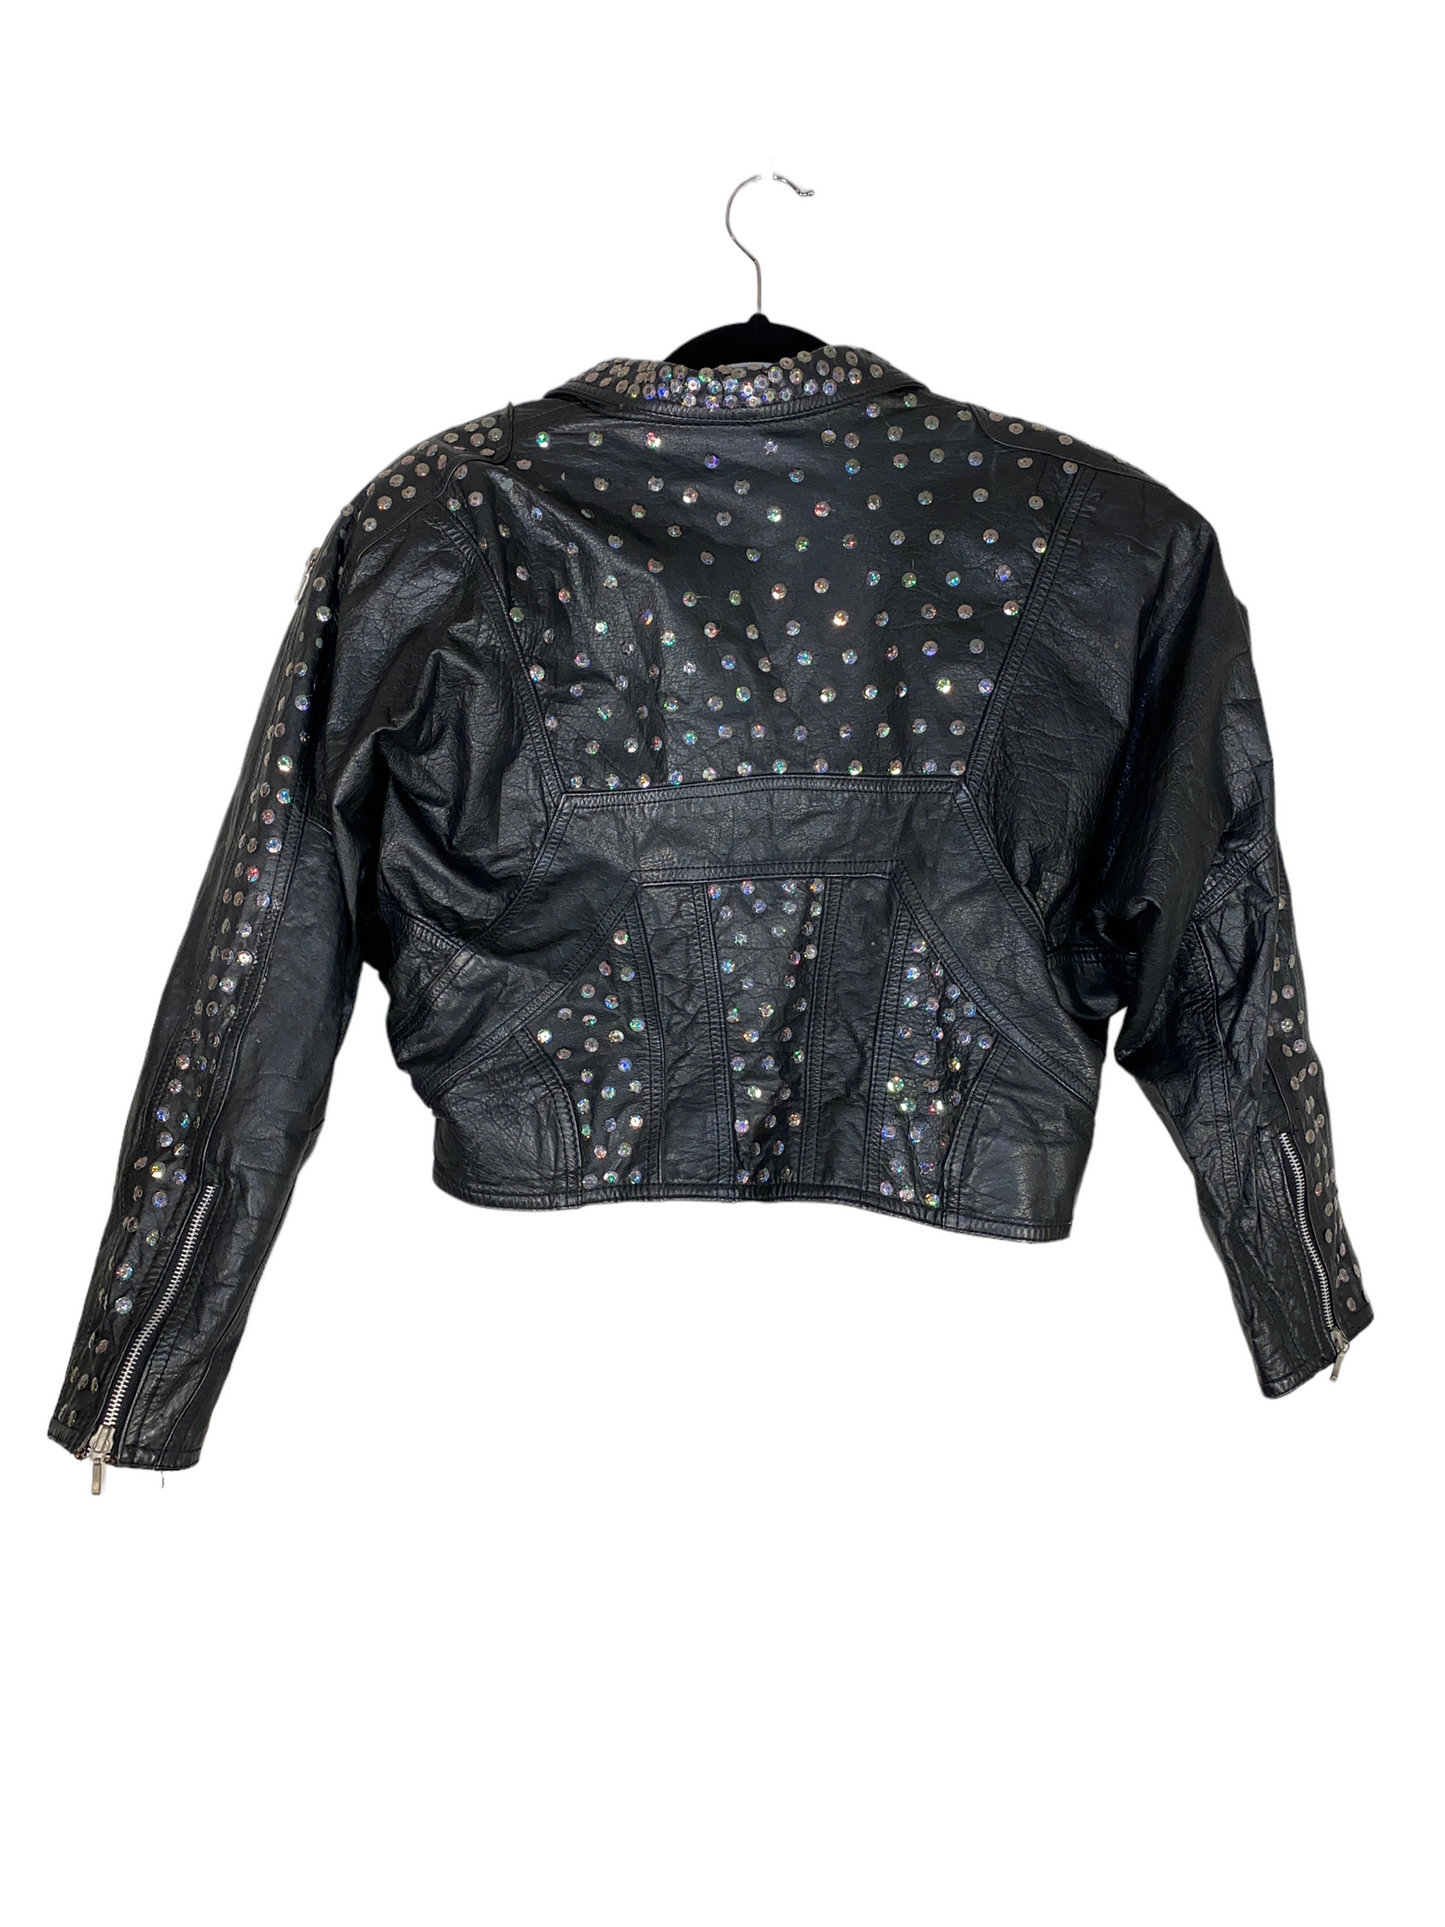 1980s Rhinestone Leather Biker Jacket